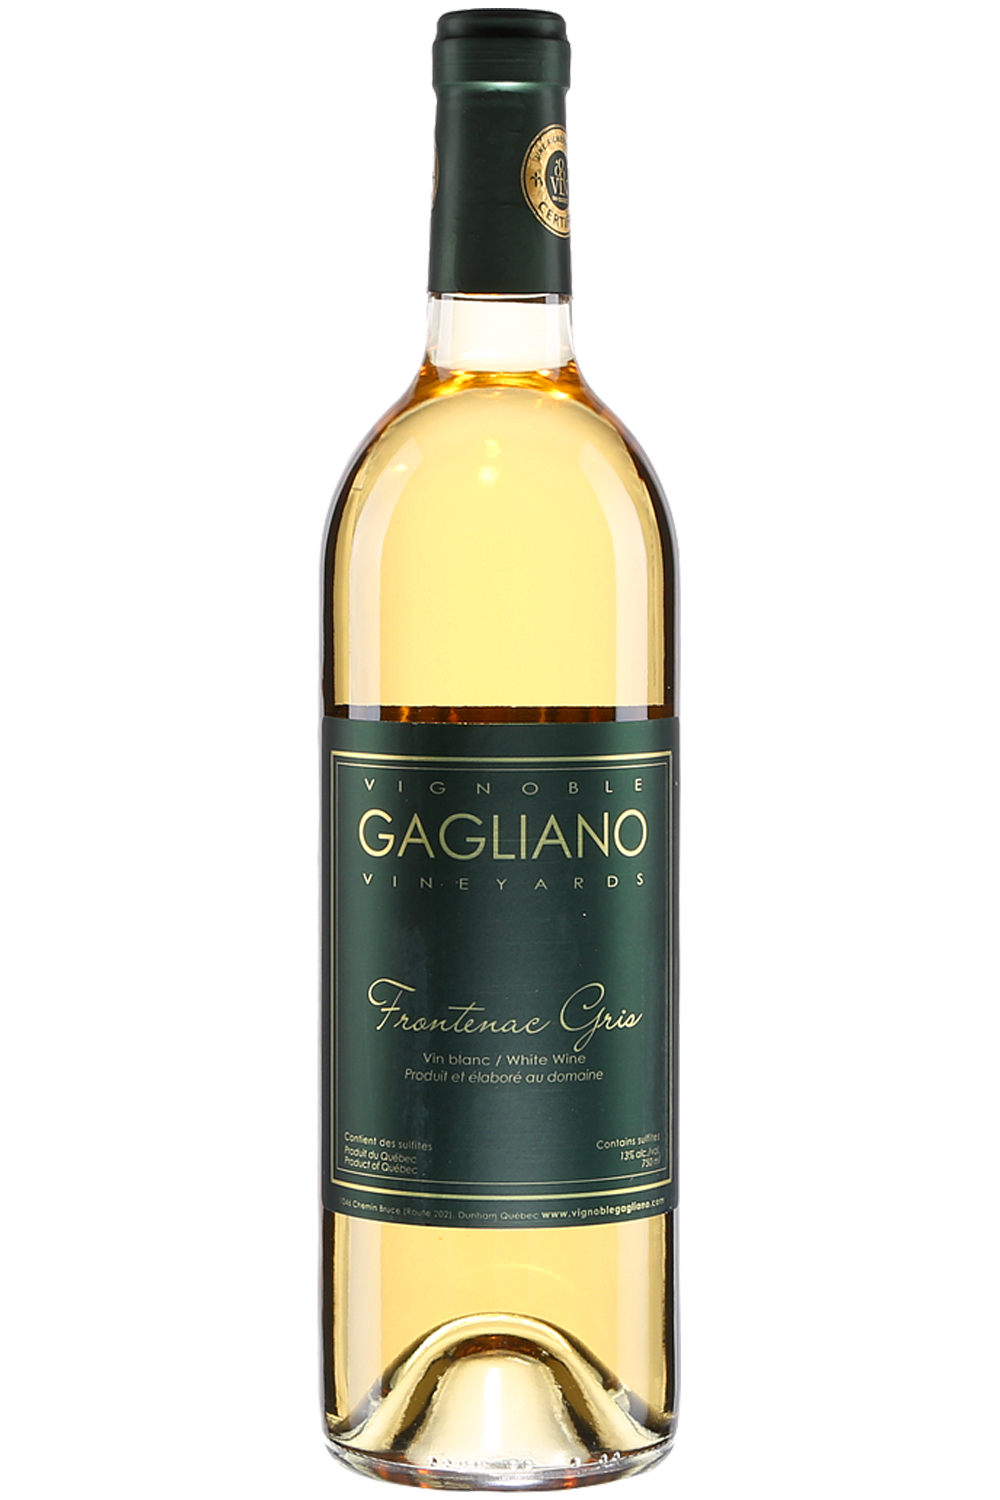 Vignoble Gagliano - Frontenac gris - Vin Blanc - 2019 - 750ml